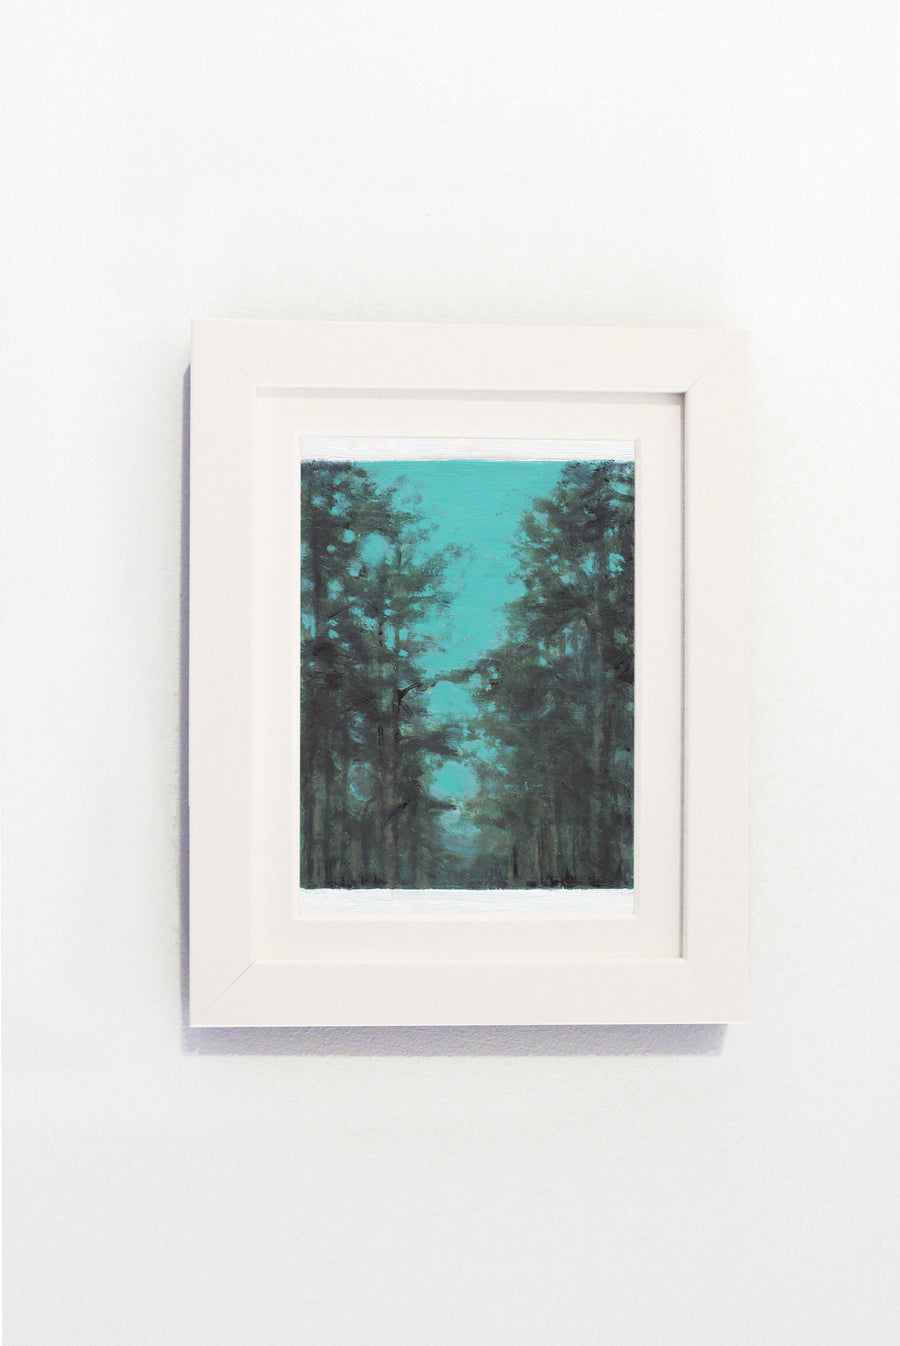 Kate Sherman - Forest, Dusk